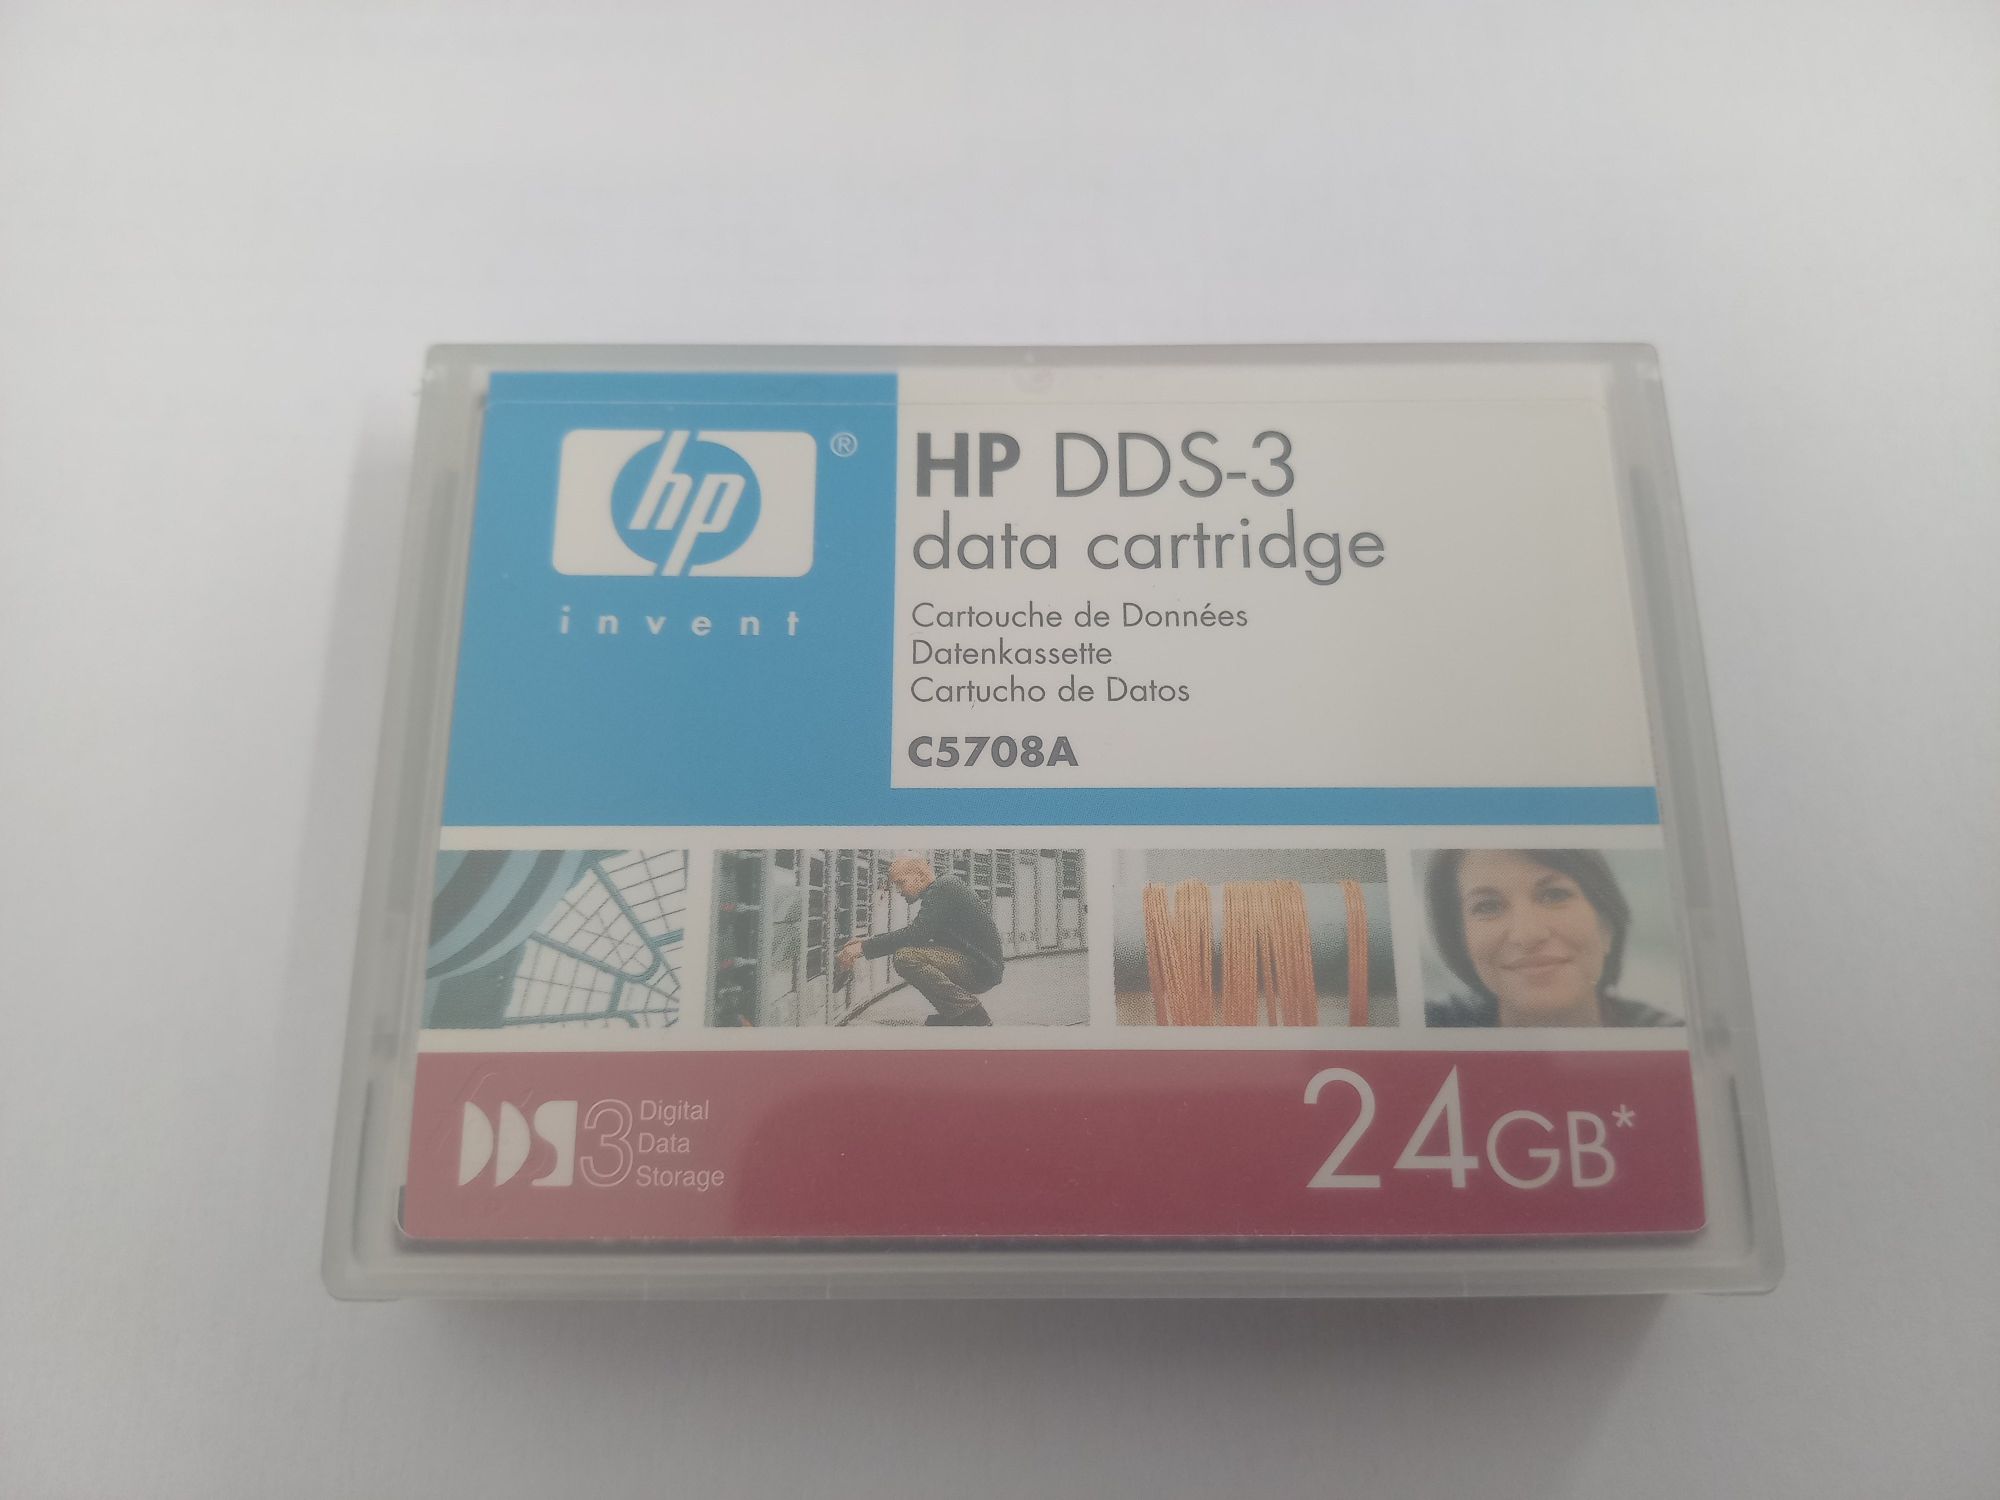 DDS-3 data cartridge 24GB